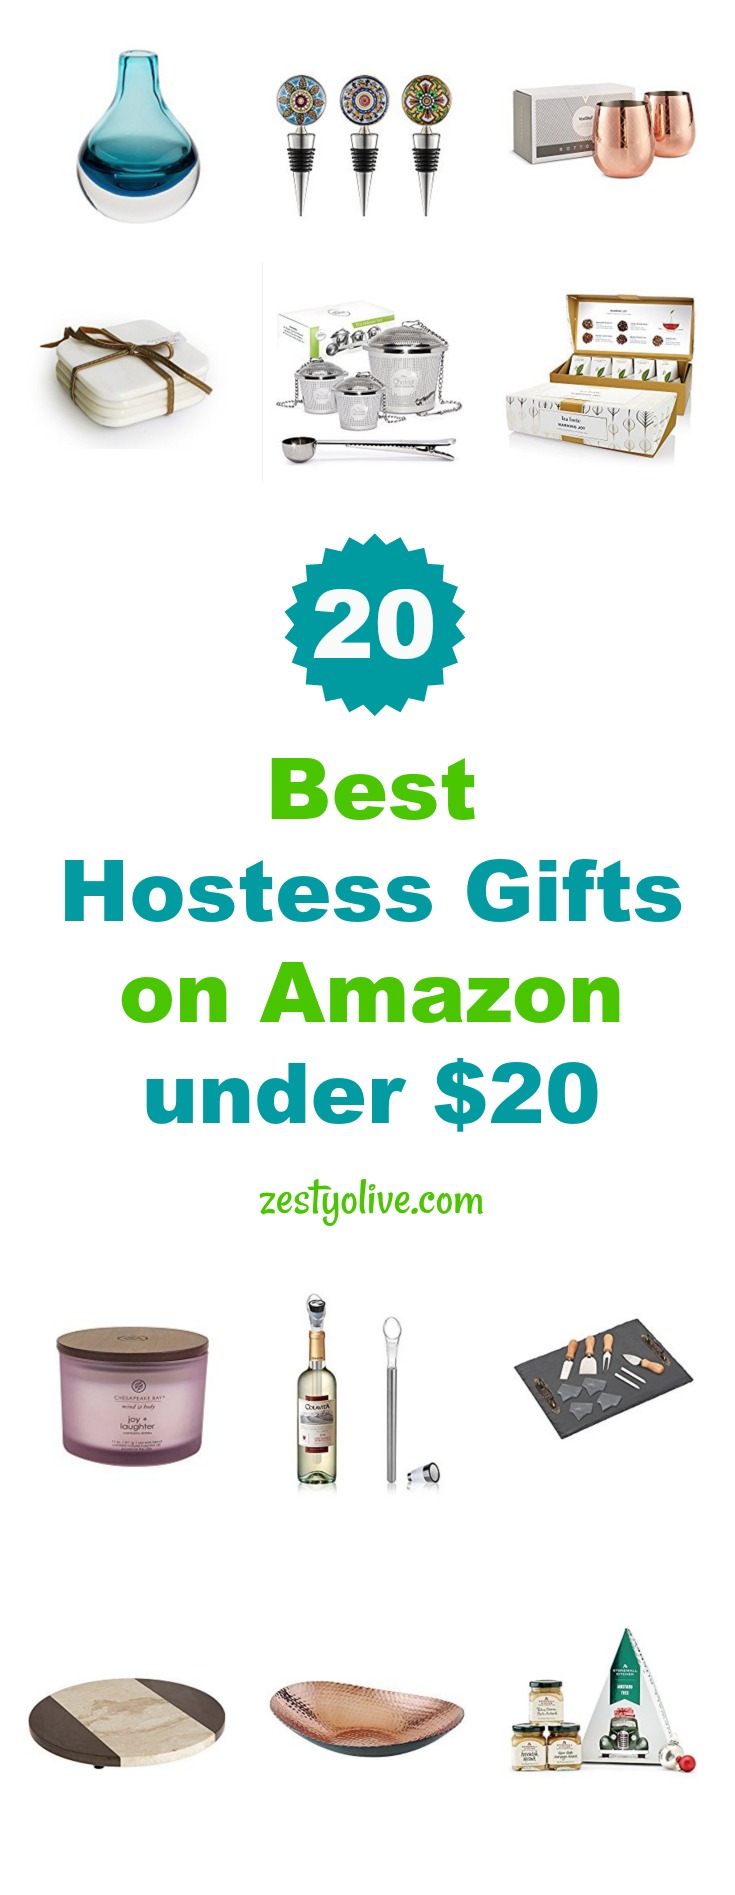 http://zestyolive.com/wp-content/uploads/2017/12/20-best-hostess-gifts-under-20-abcd.jpg